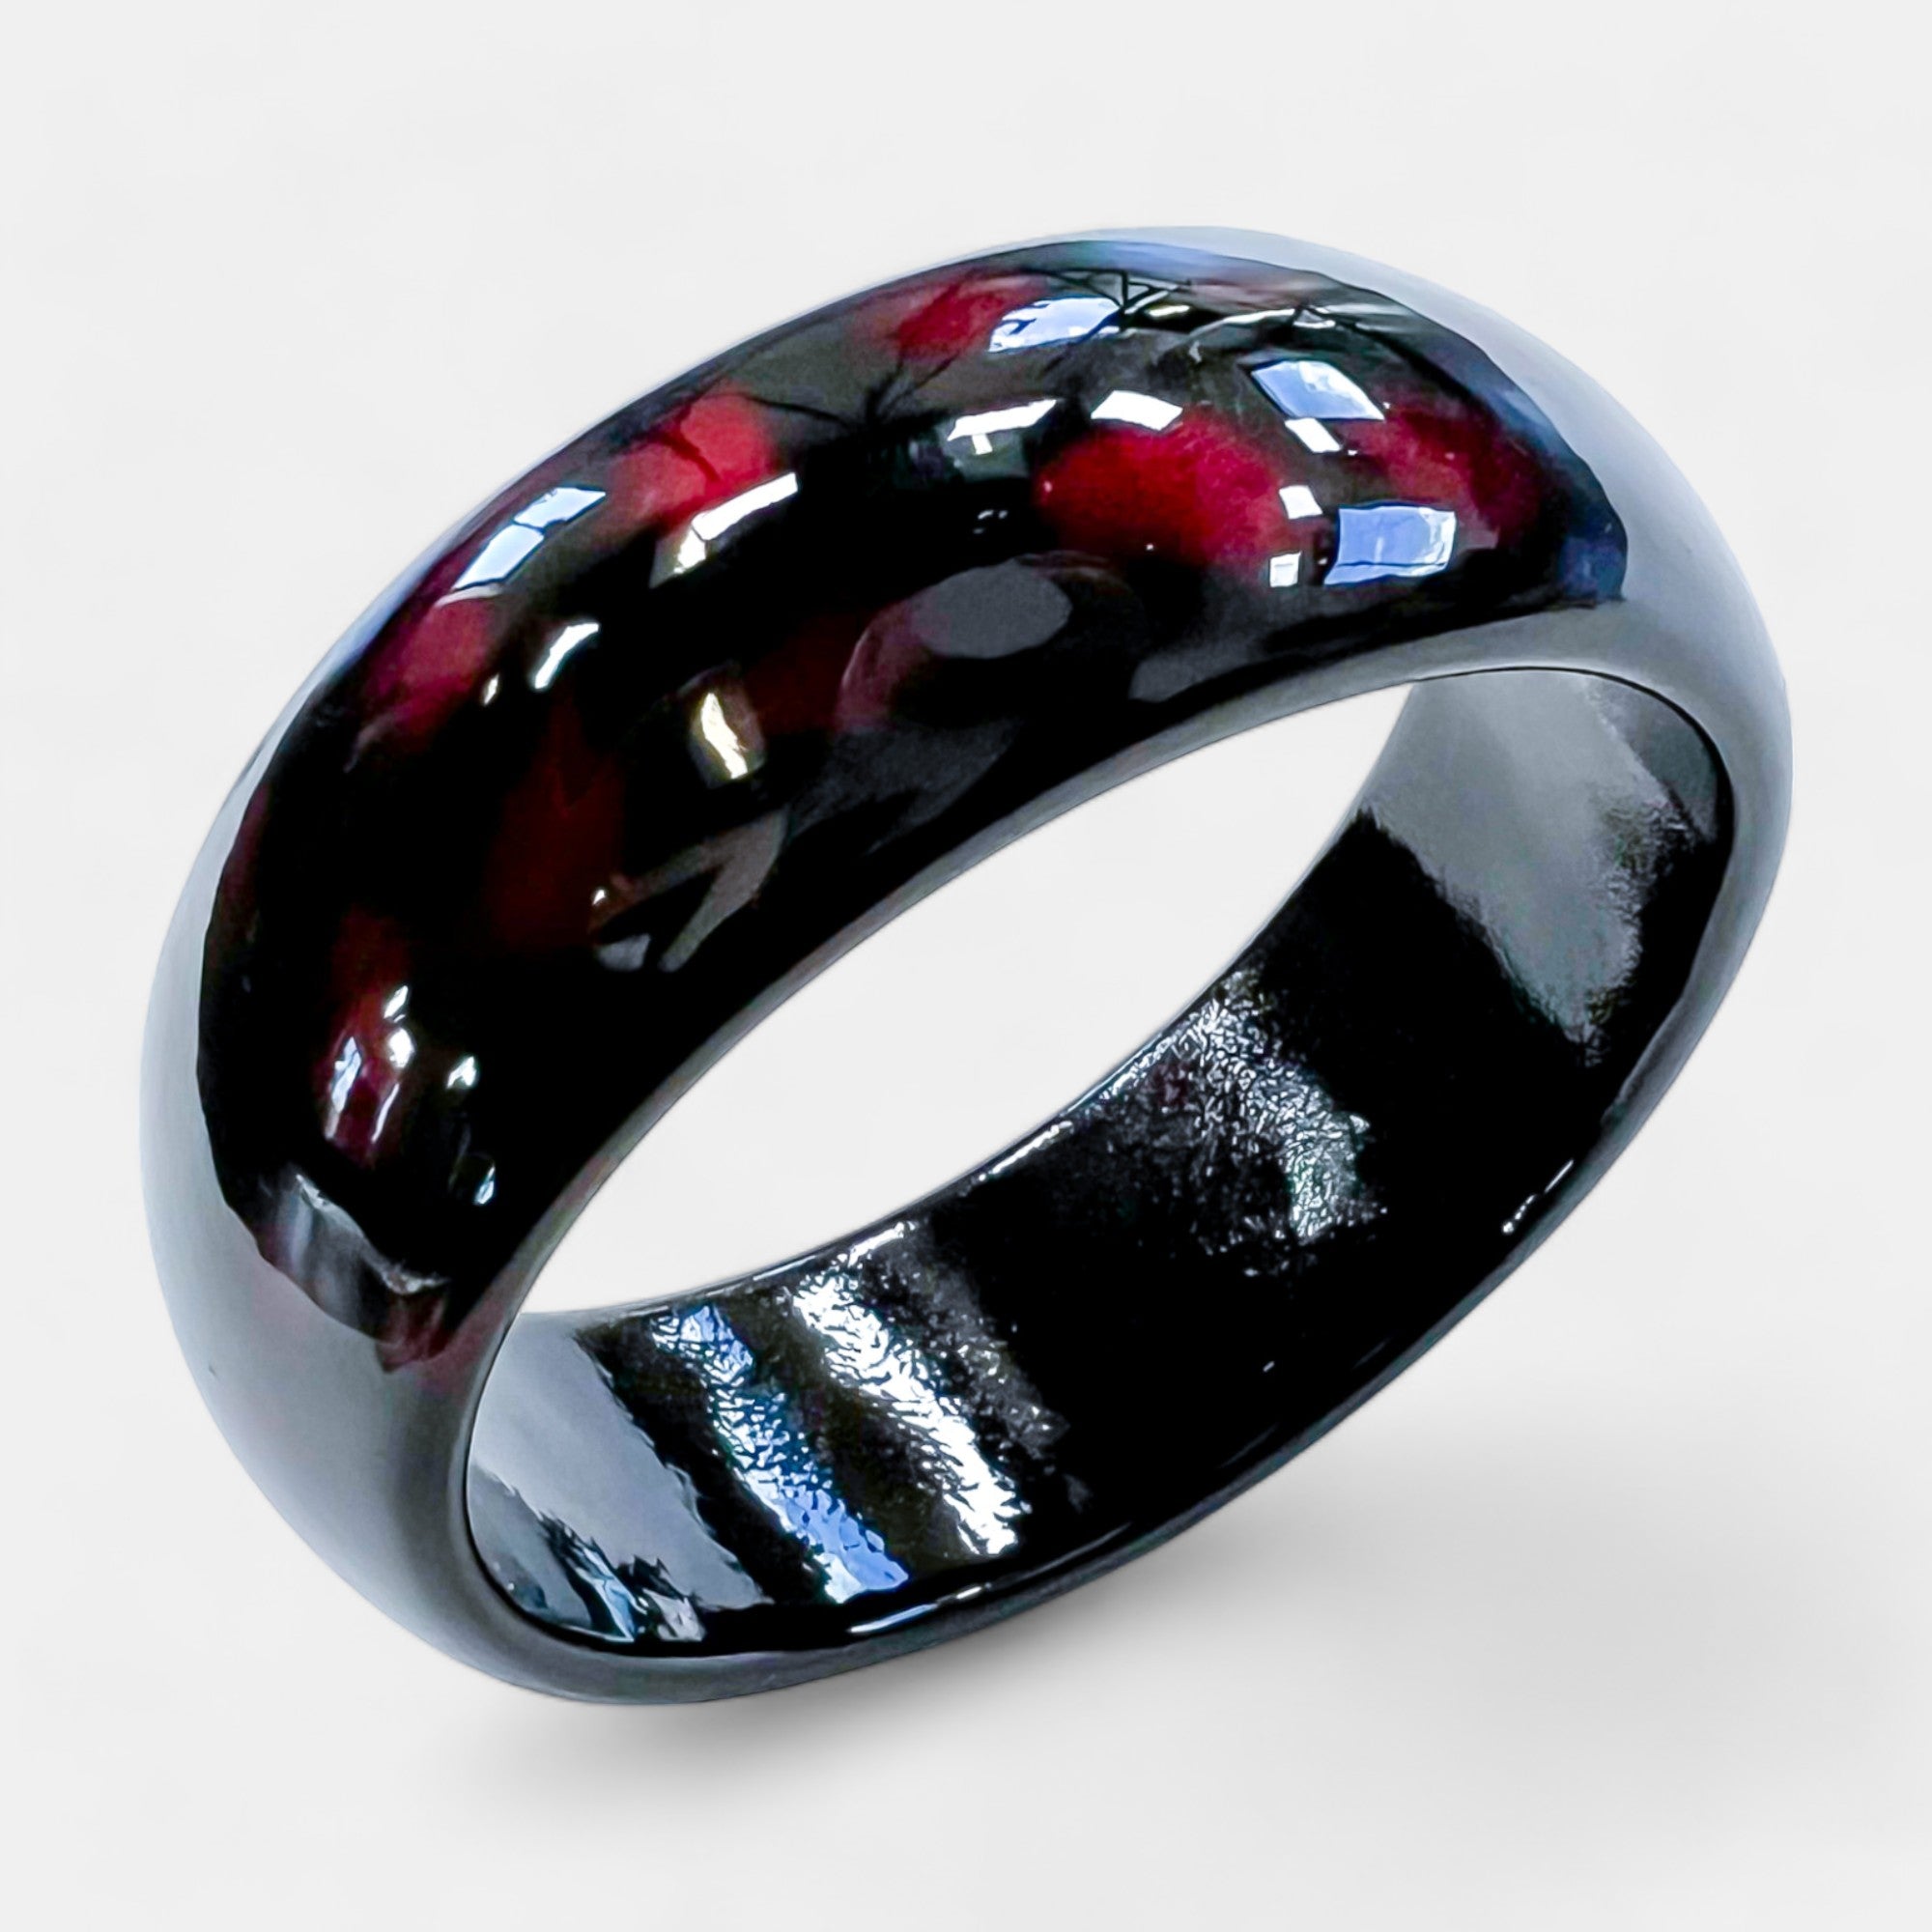 Black & Red Shimmery Bangle Bracelet